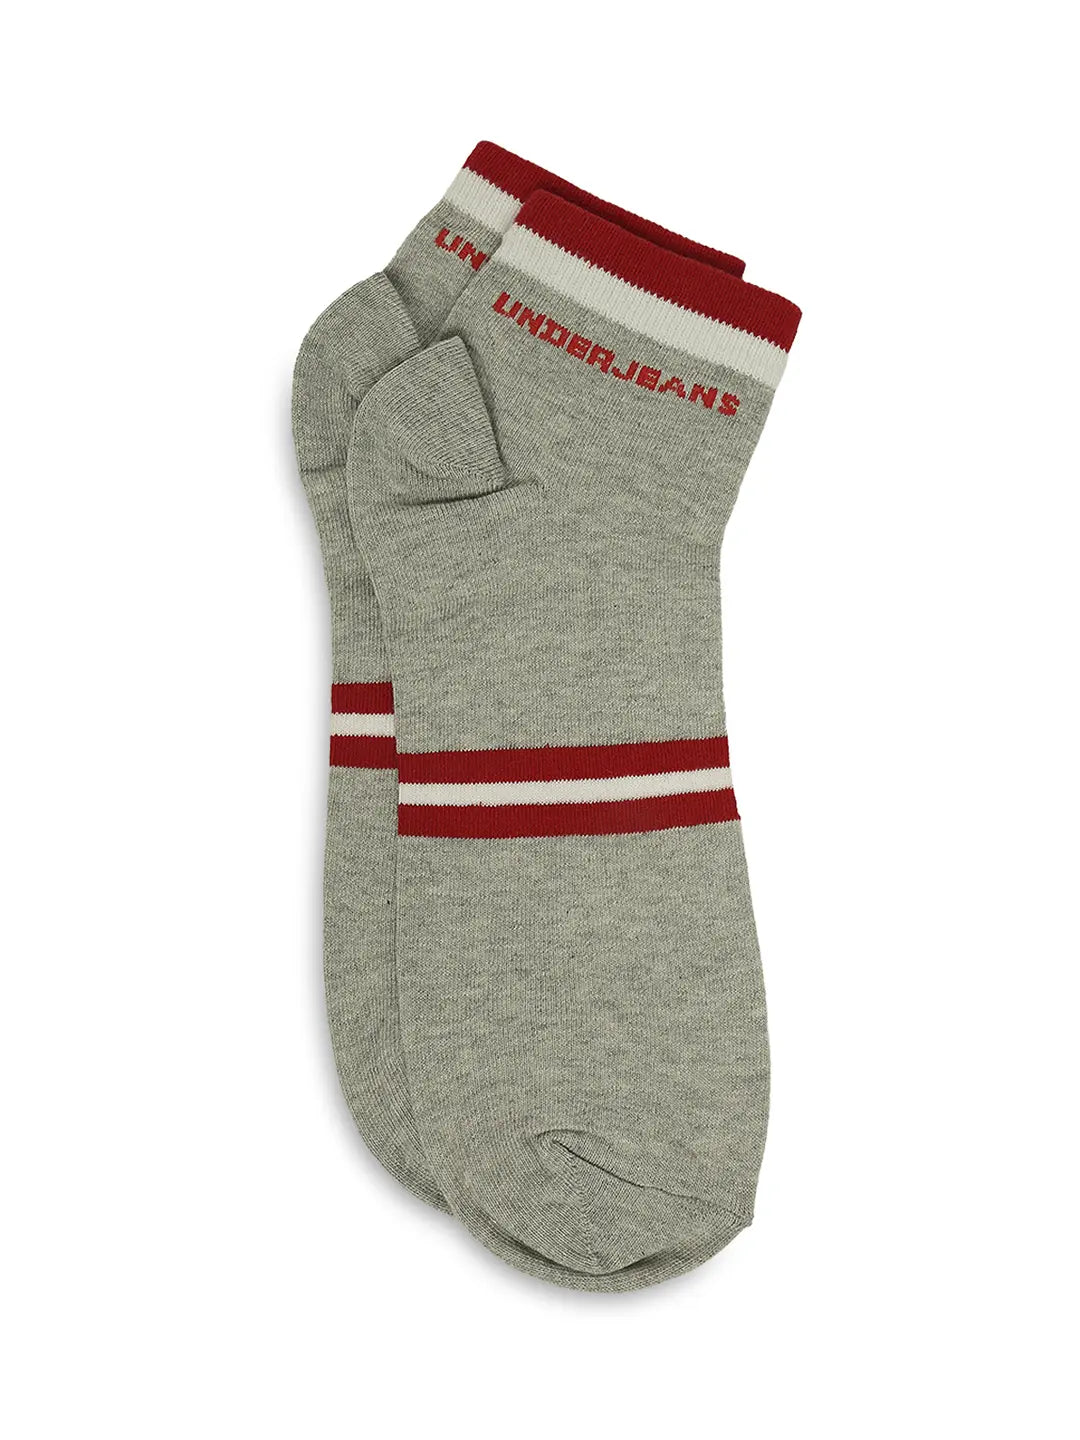 Men Premium Black & Grey Melange Ankle Length Socks - Pack Of 2 - Underjeans by Spykar